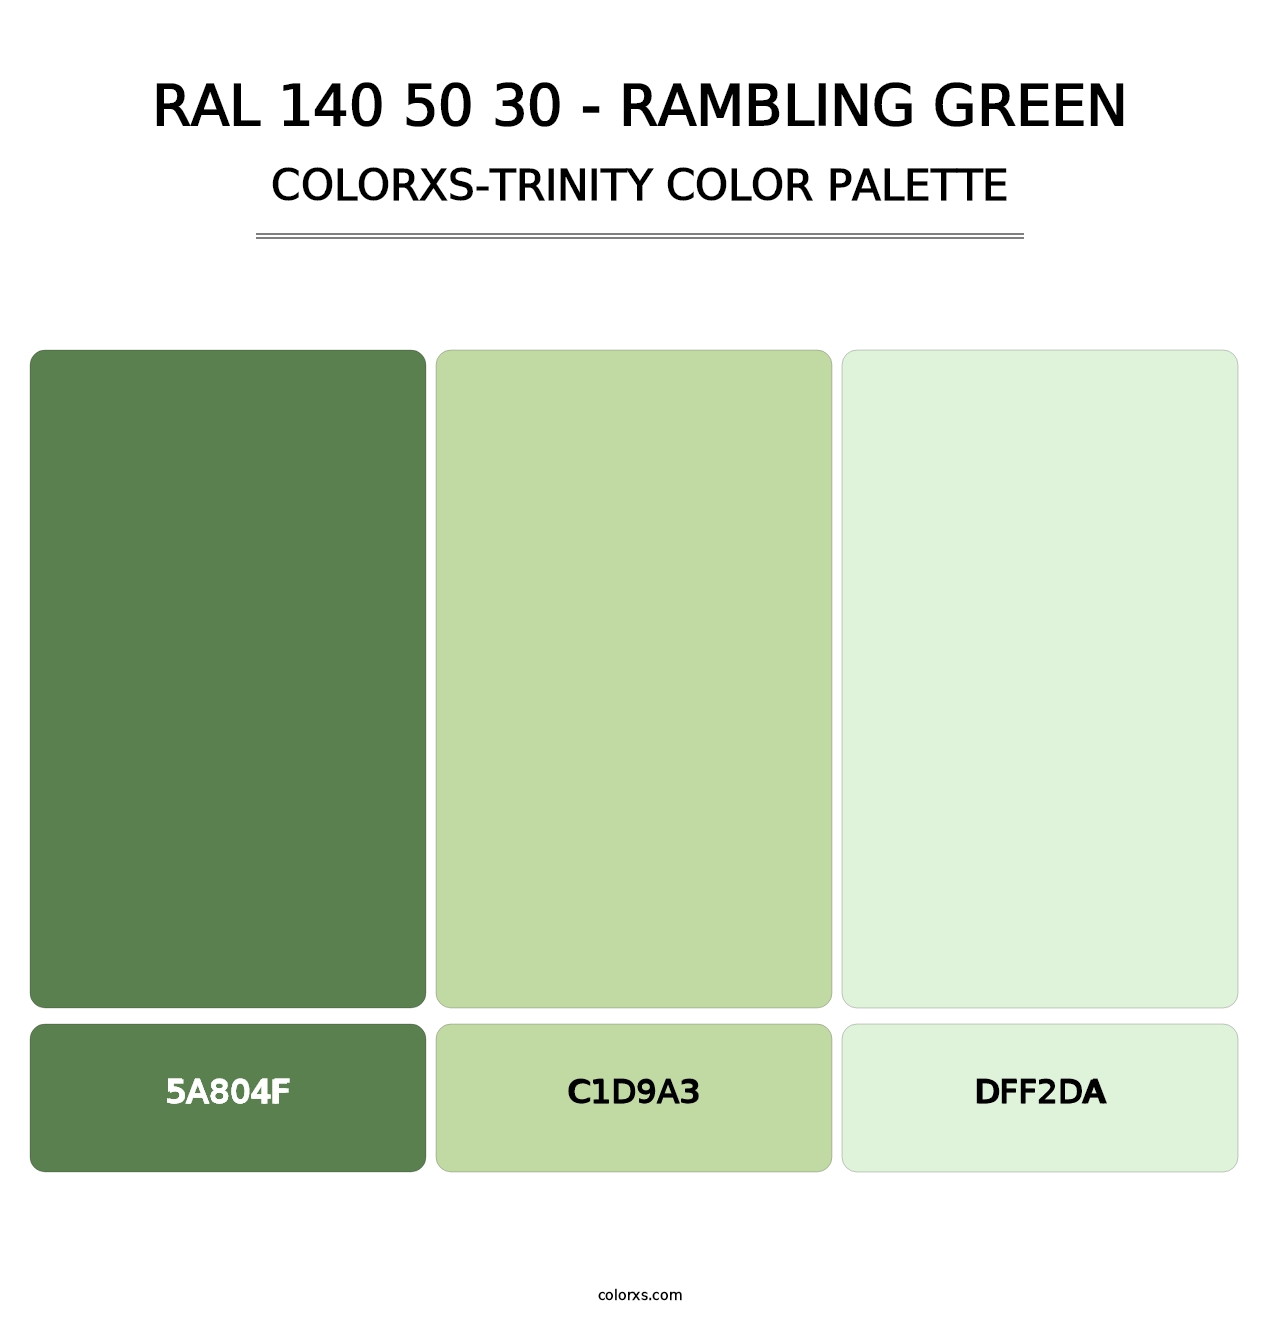 RAL 140 50 30 - Rambling Green - Colorxs Trinity Palette